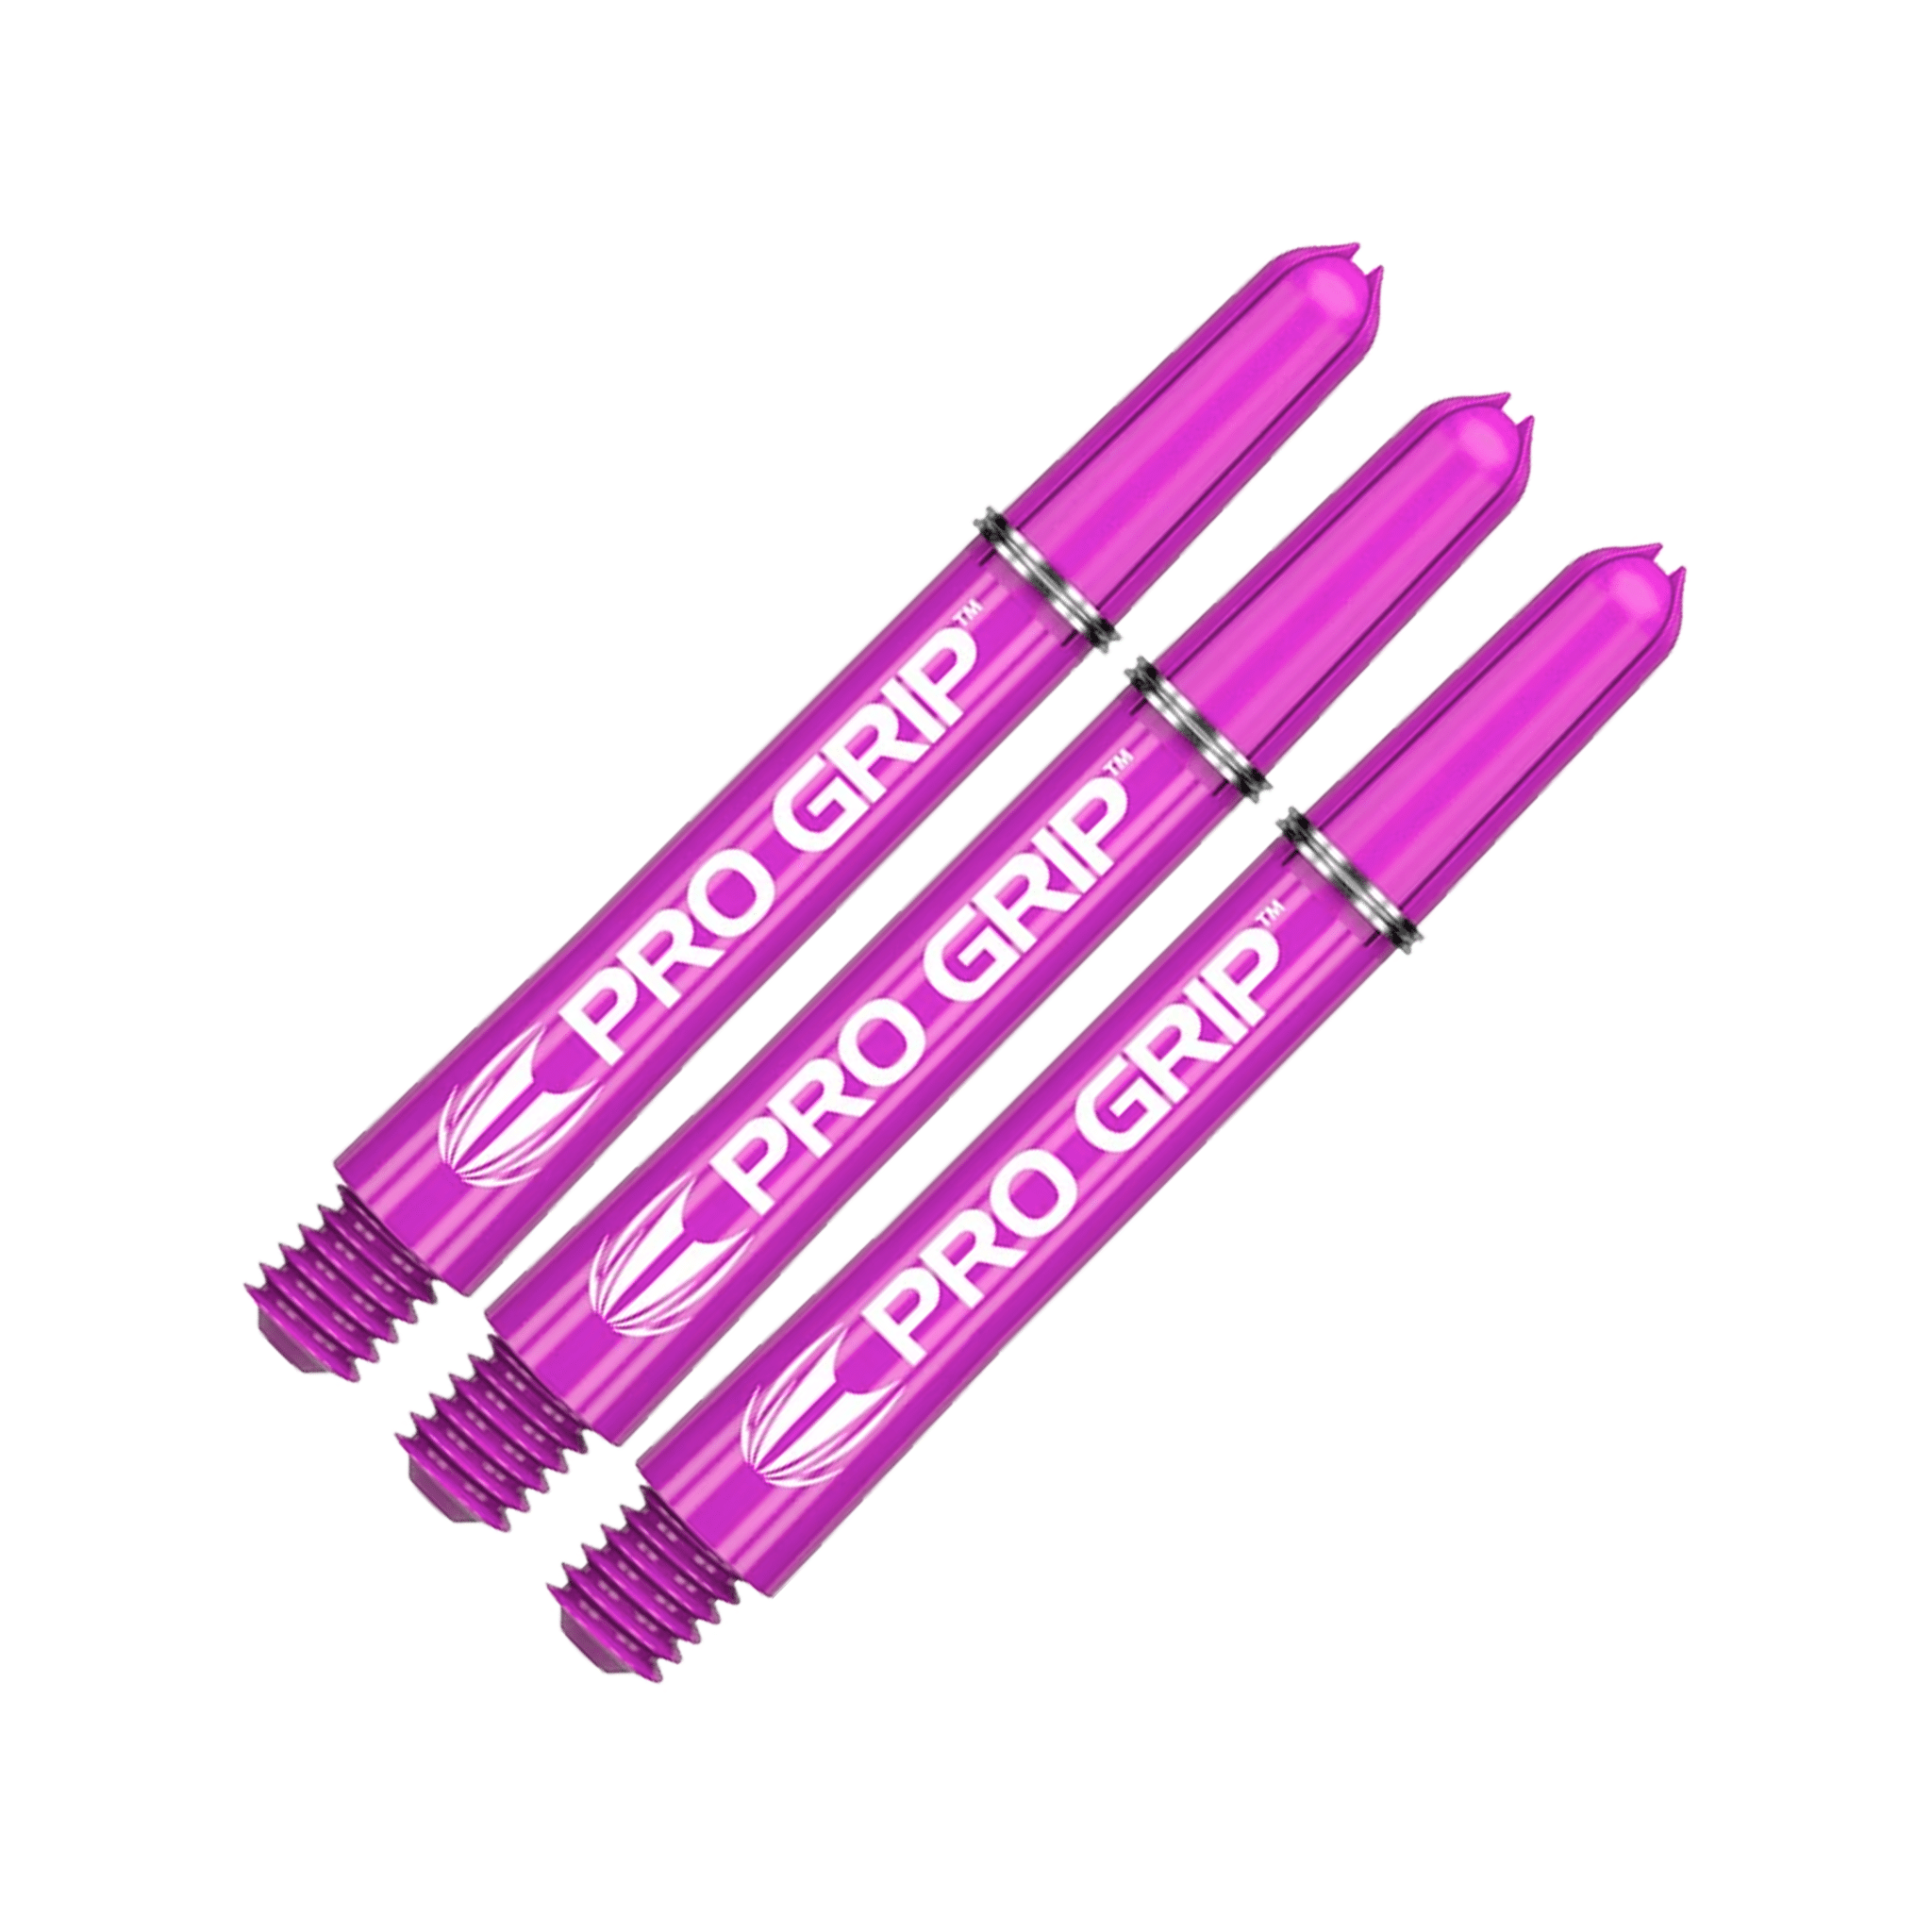 Target Pro Grip Multi Pack - Nylon Dart Shafts (3 Sets) Purple / Intermediate (41mm) Shafts